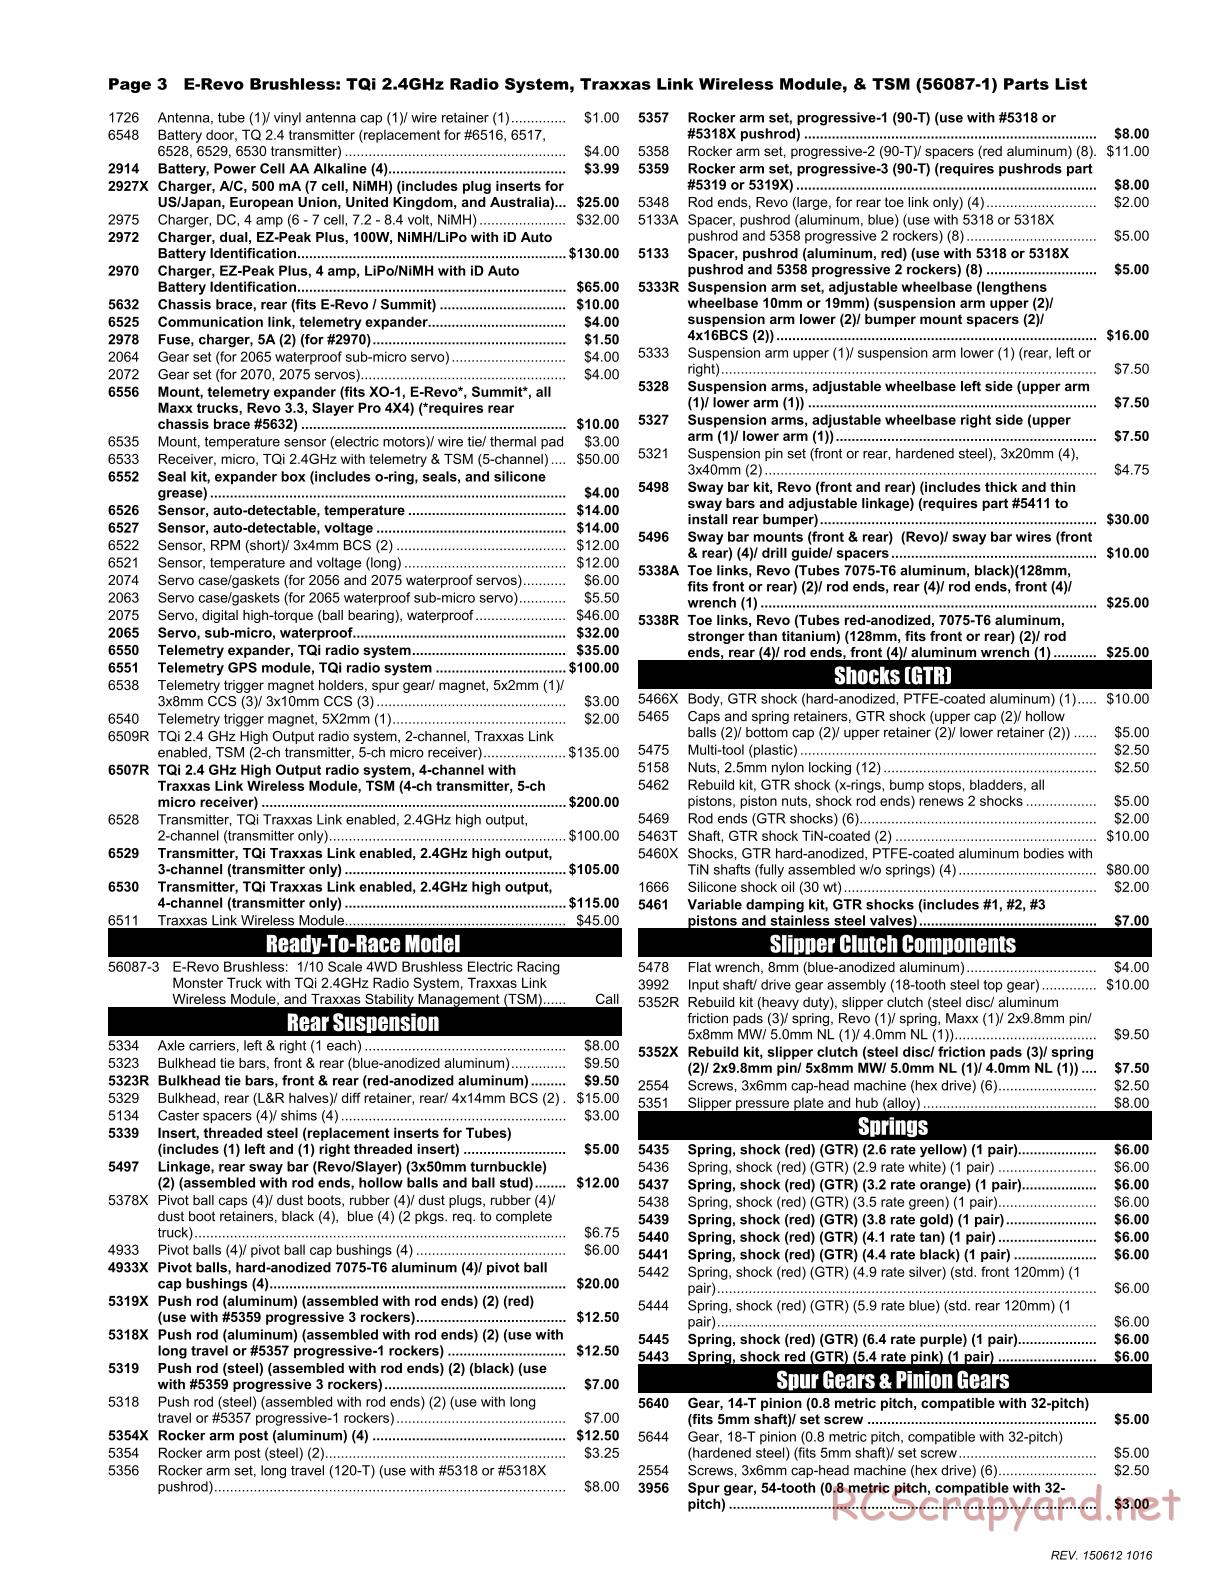 Traxxas - E-Revo Brushless TSM - Parts List - Page 3